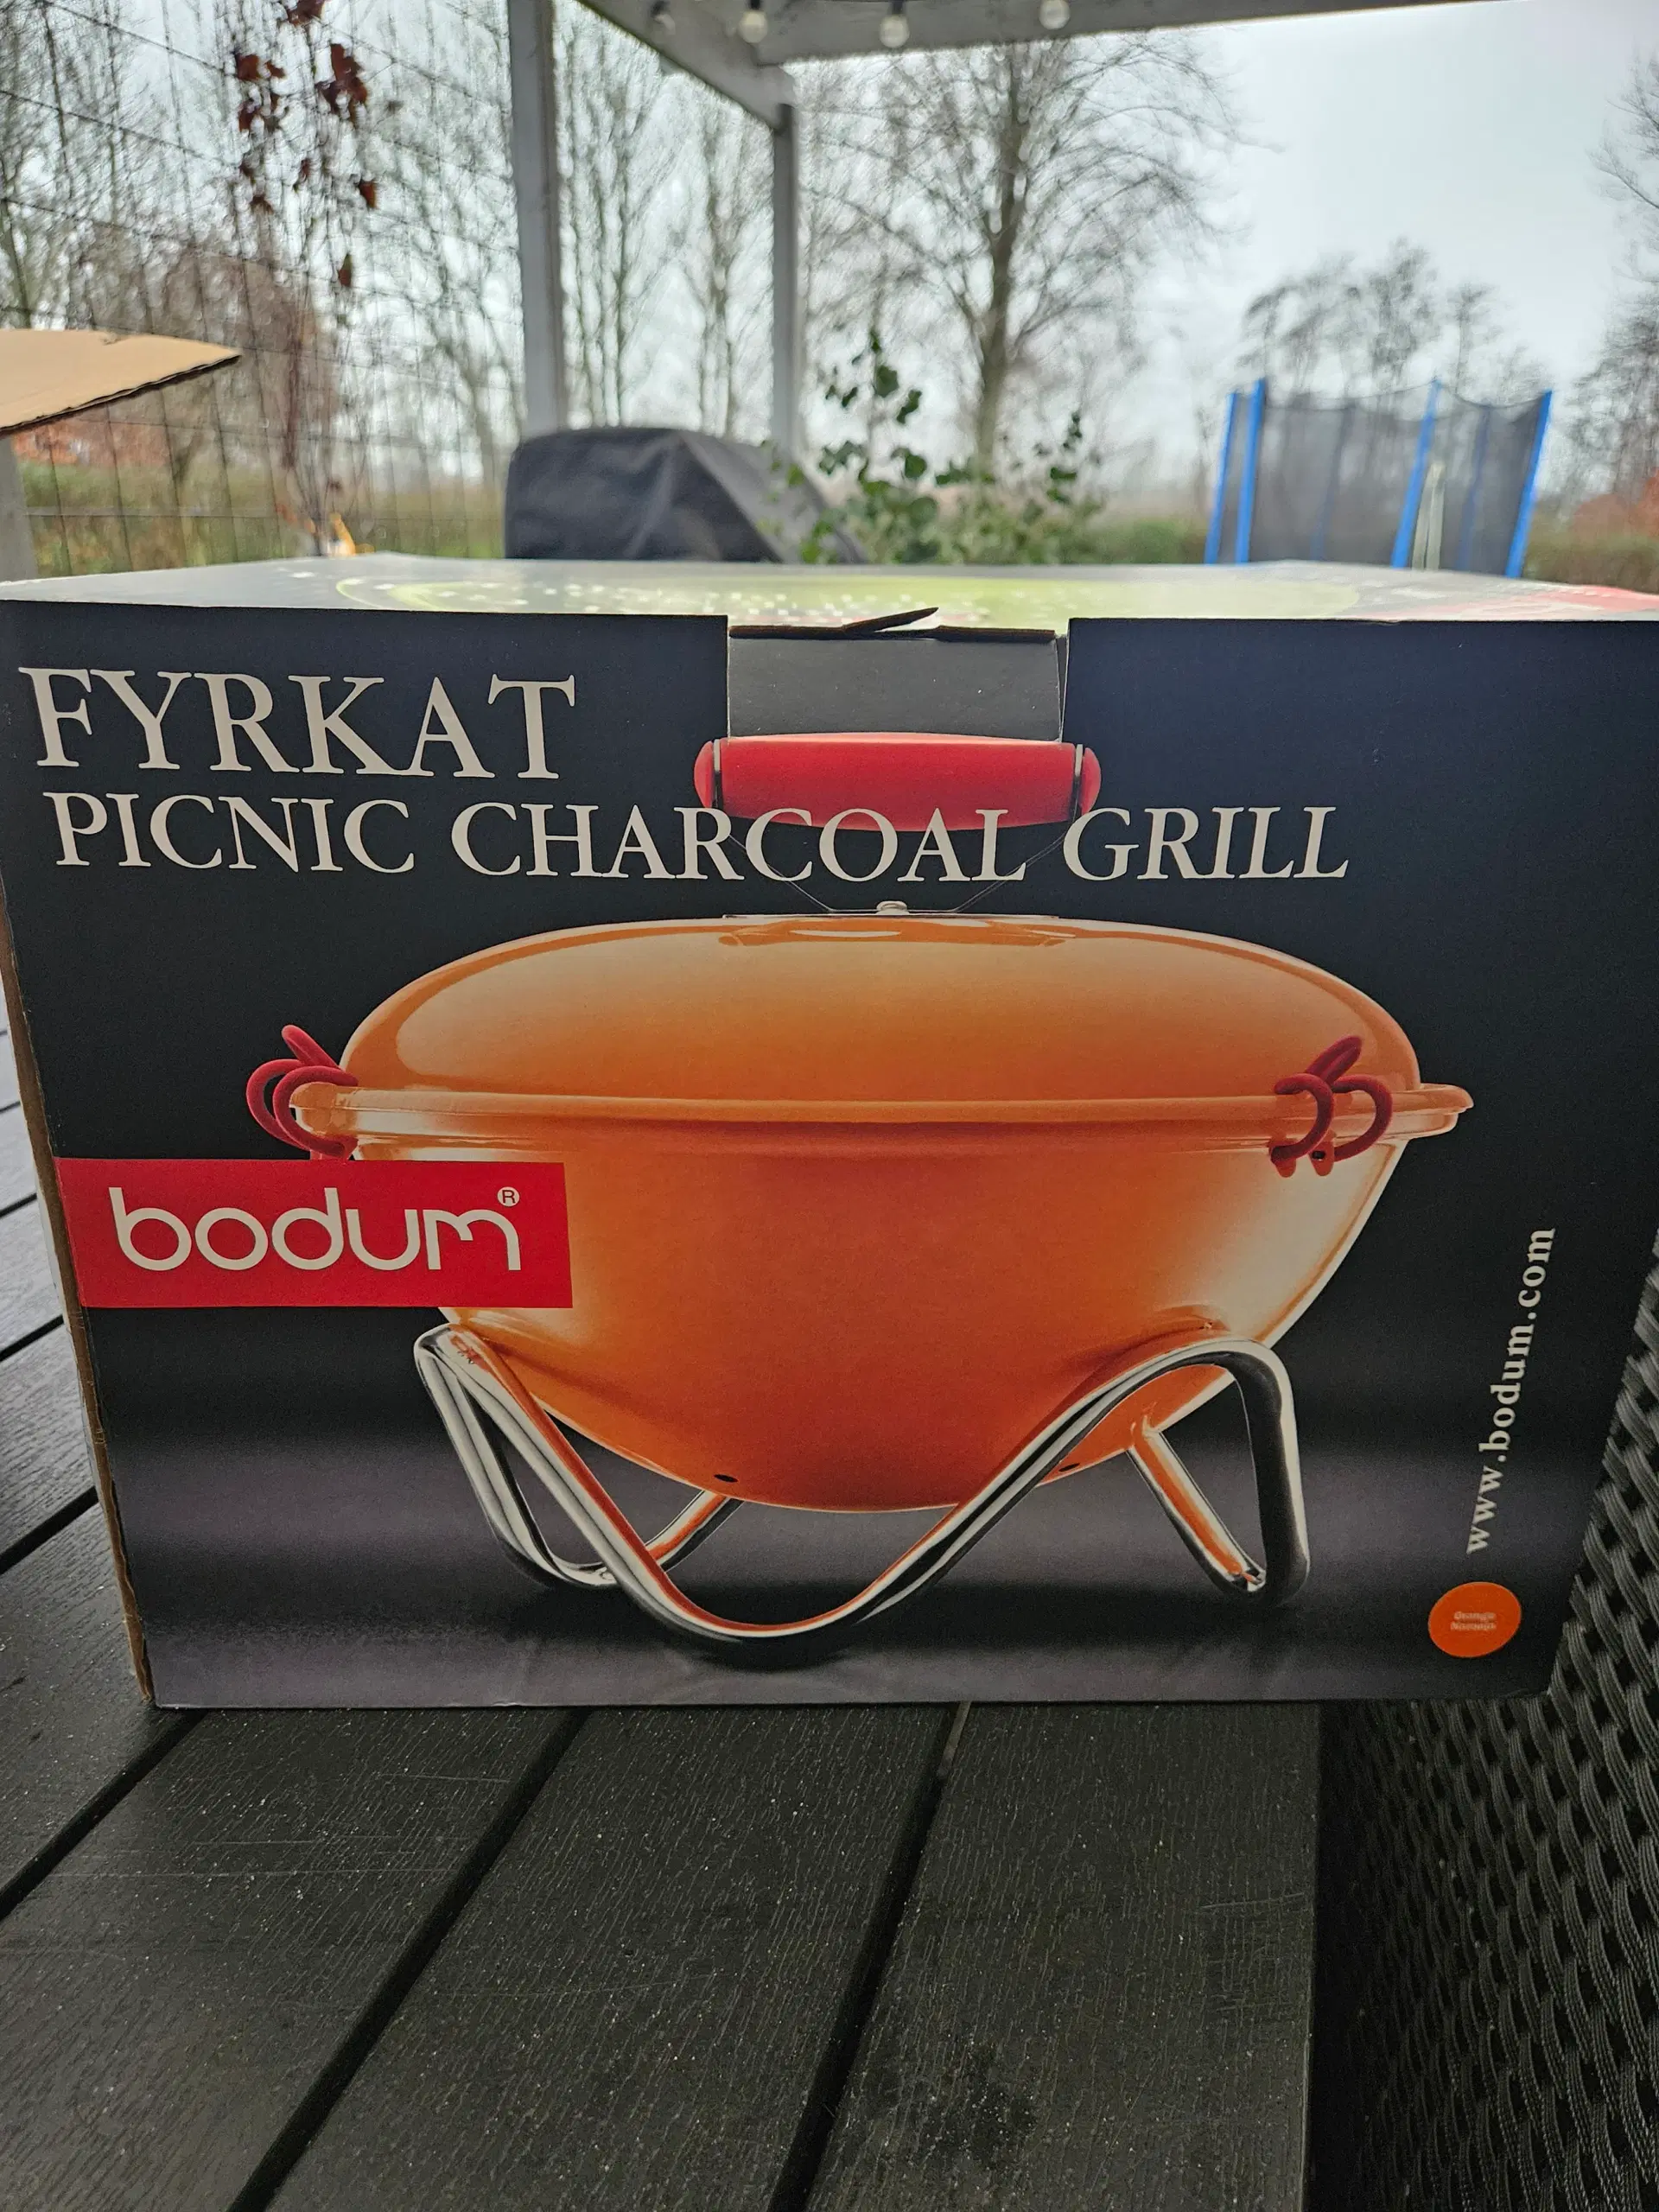 Bodum grill